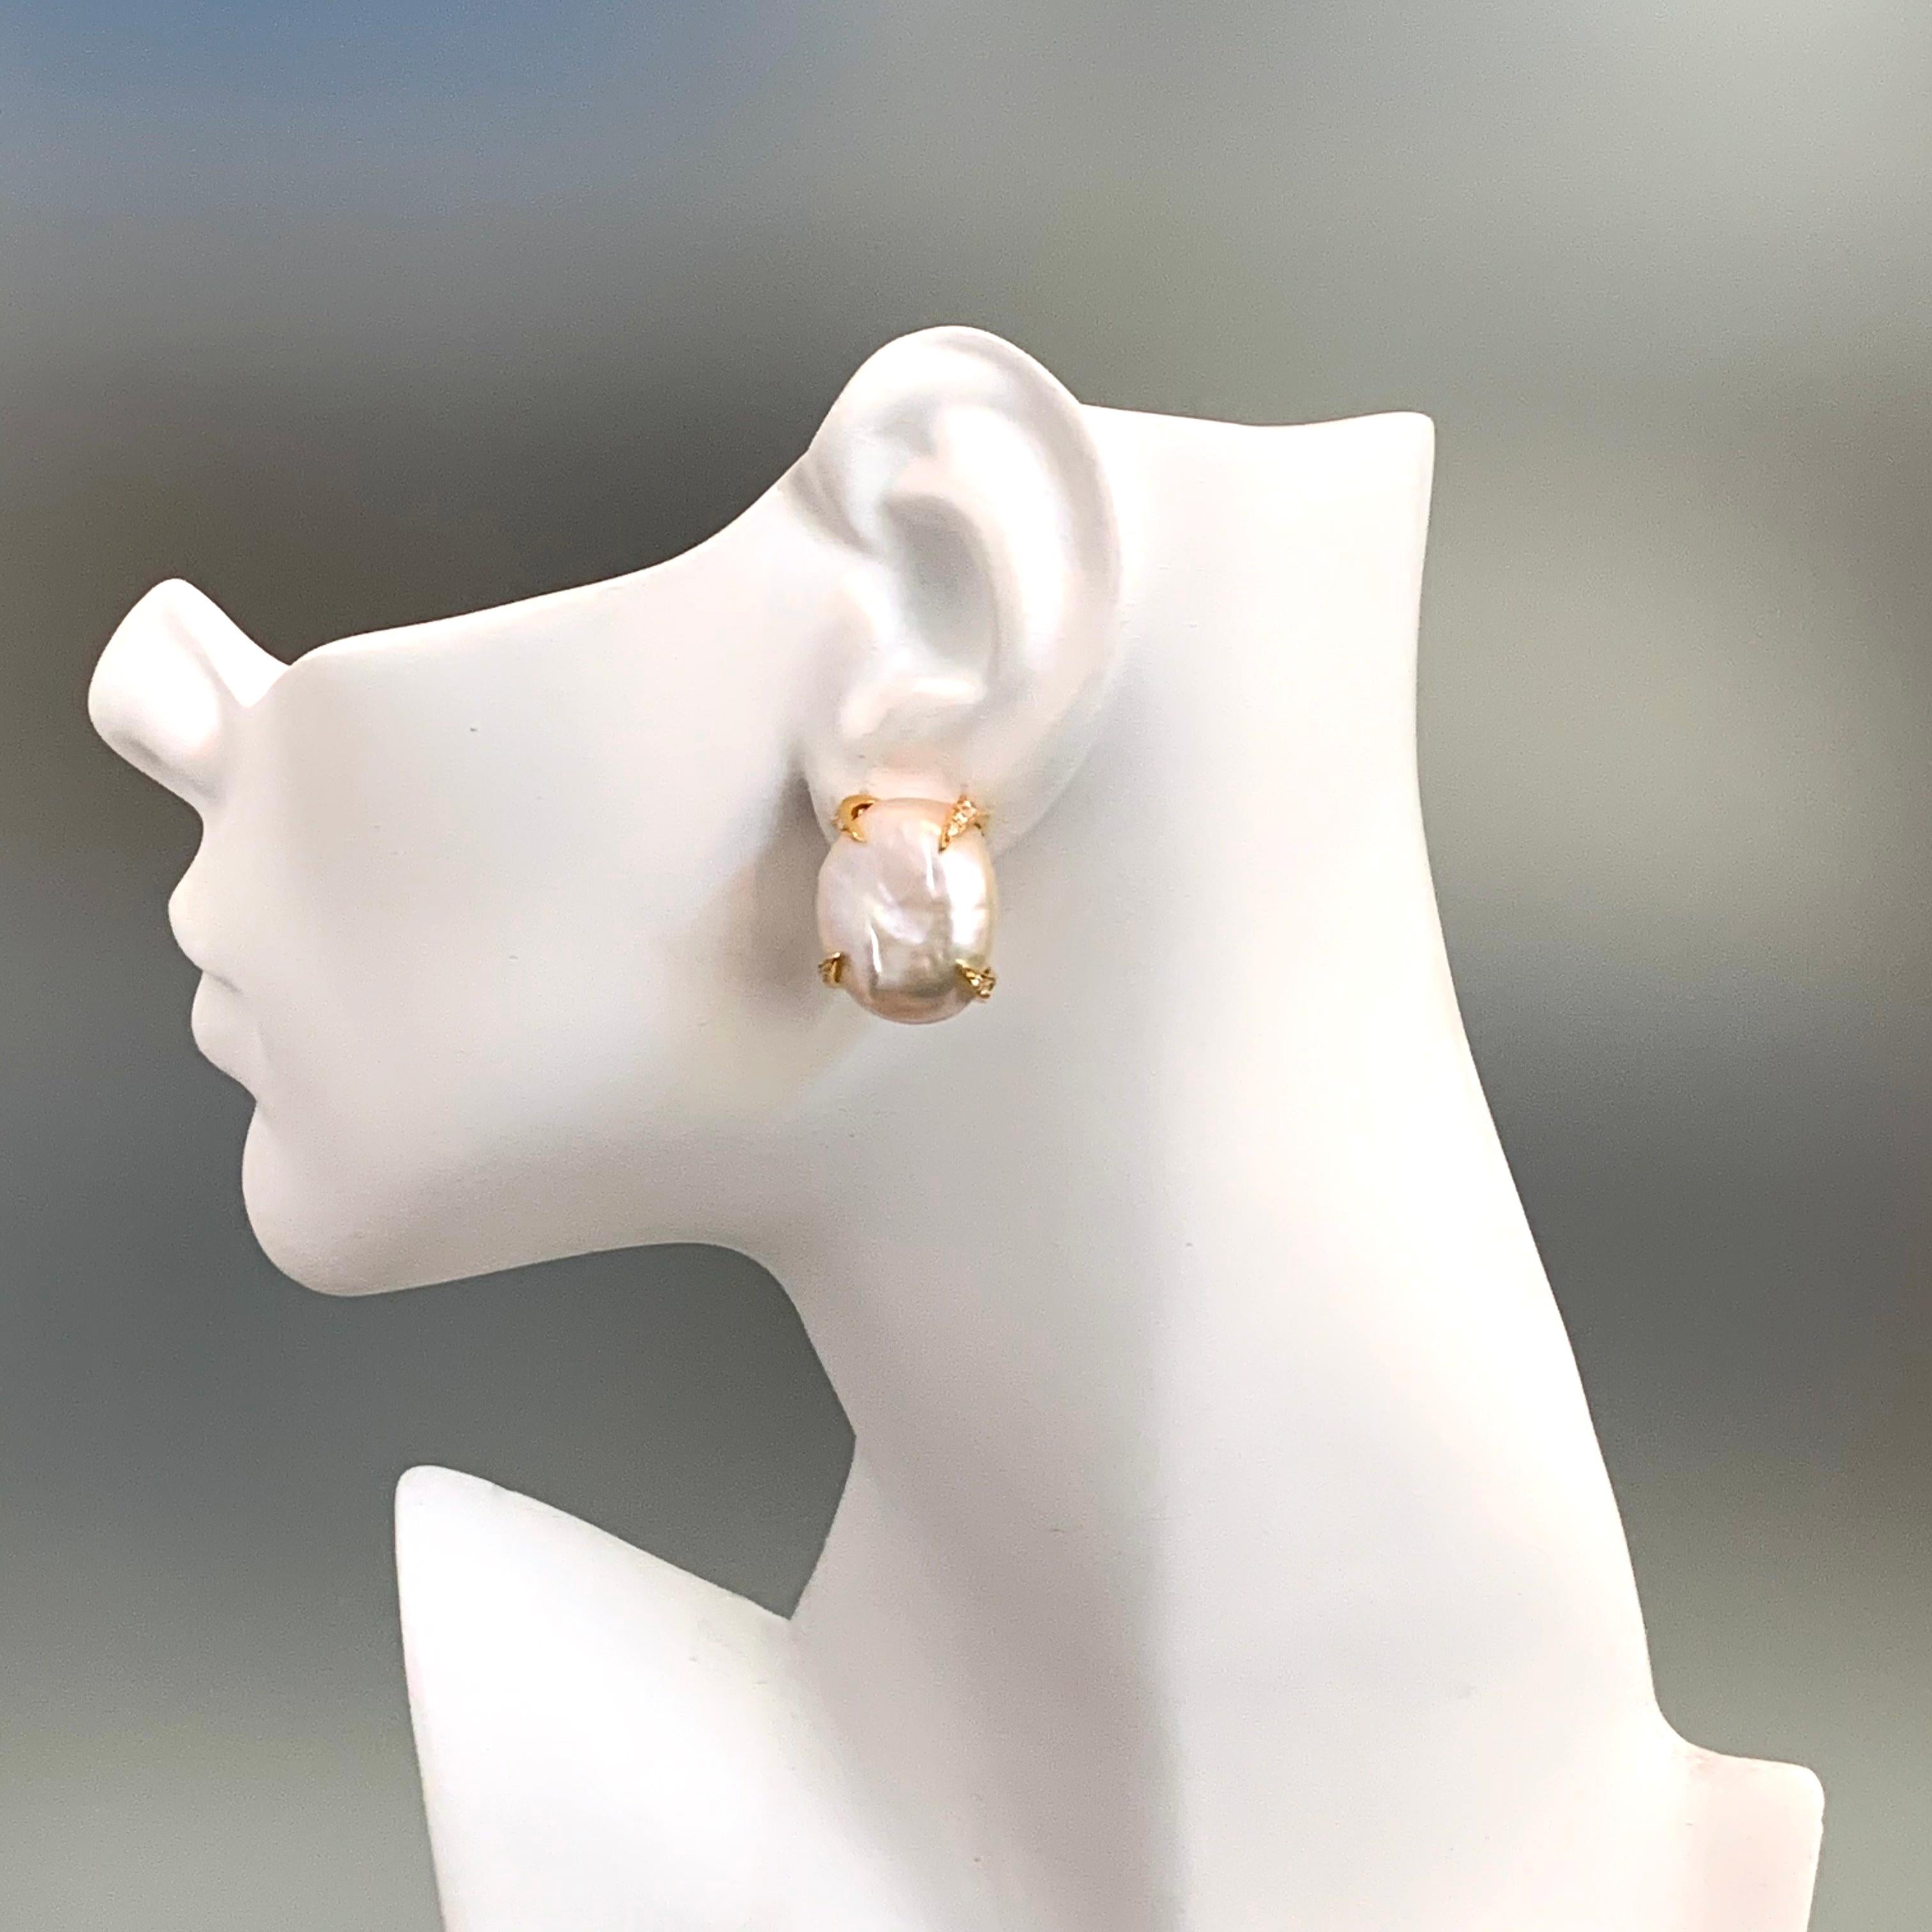 18mm pearl earrings